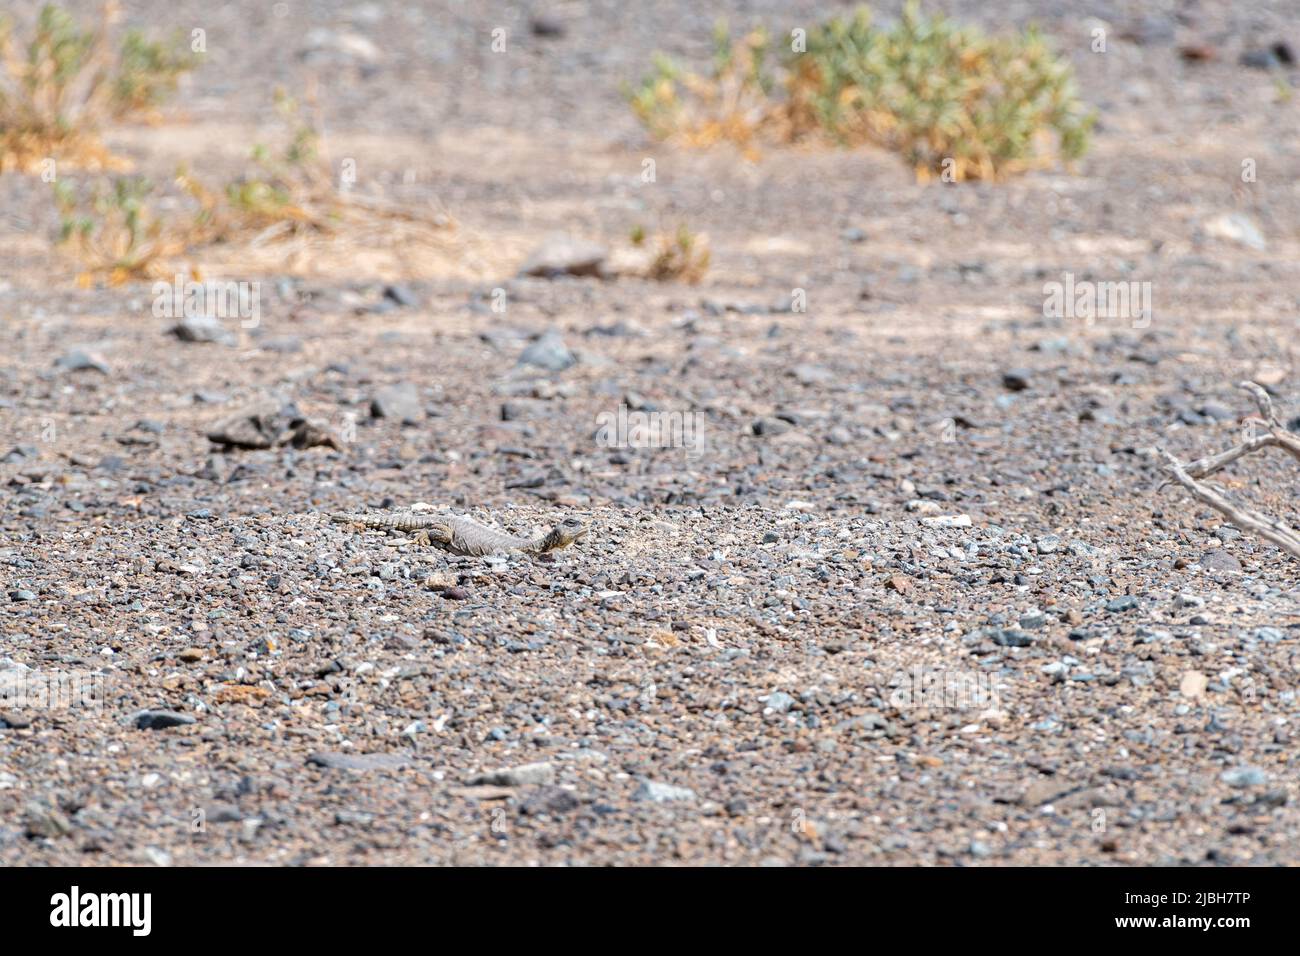 Dabb Lizard or Uromastyx in the desert, United Arab Emirates, UAE, Middle East, Arabian Peninsula Stock Photo